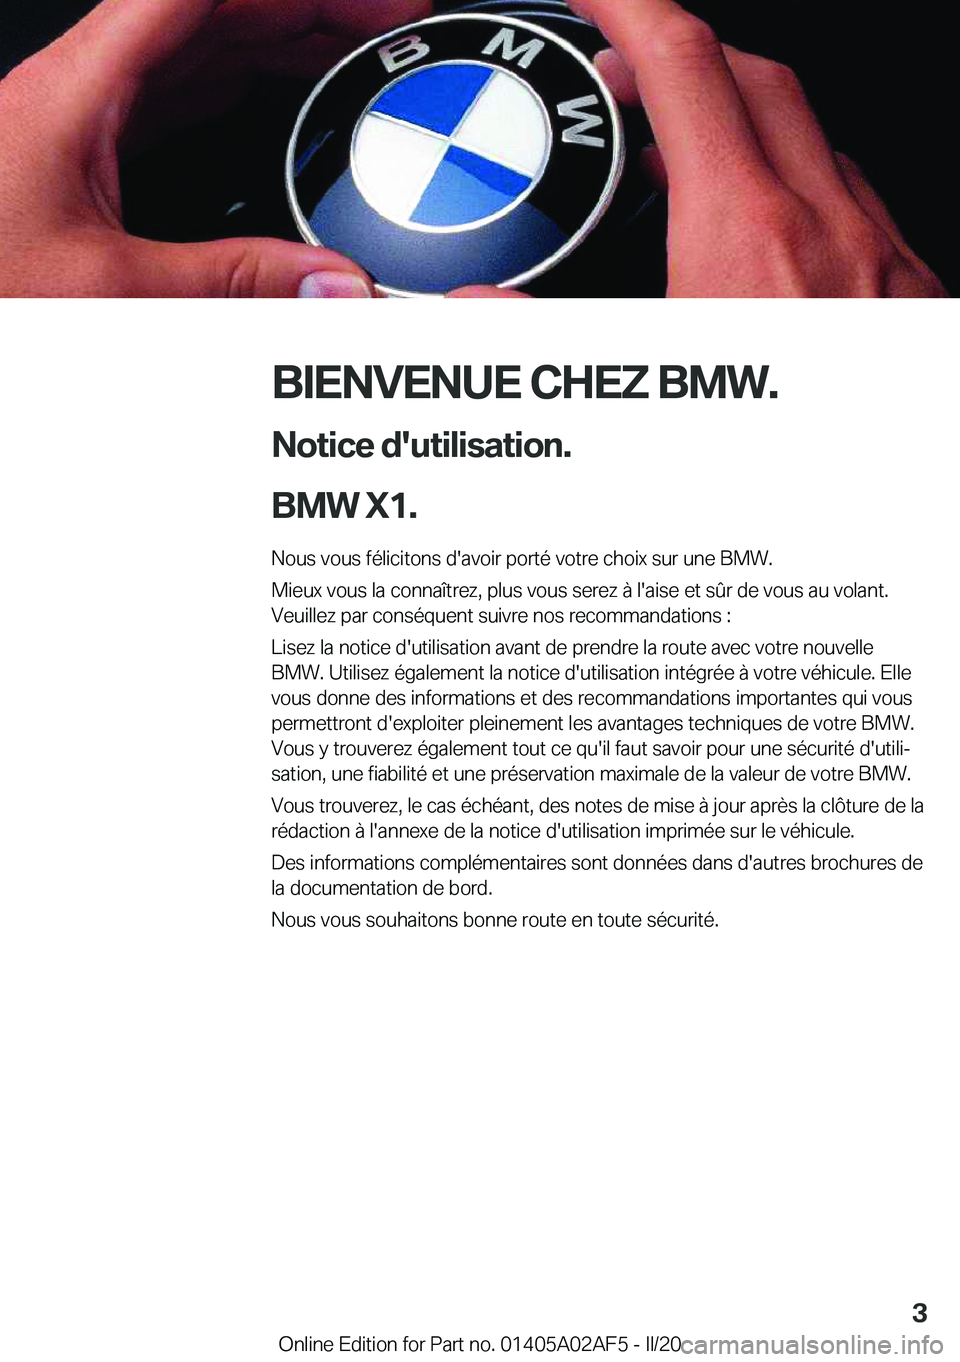 BMW X1 2020  Notices Demploi (in French) �B�I�E�N�V�E�N�U�E��C�H�E�Z��B�M�W�.�N�o�t�i�c�e��d�'�u�t�i�l�i�s�a�t�i�o�n�.
�B�M�W��X�1�. �N�o�u�s��v�o�u�s��f�é�l�i�c�i�t�o�n�s��d�'�a�v�o�i�r��p�o�r�t�é��v�o�t�r�e��c�h�o�i�x�